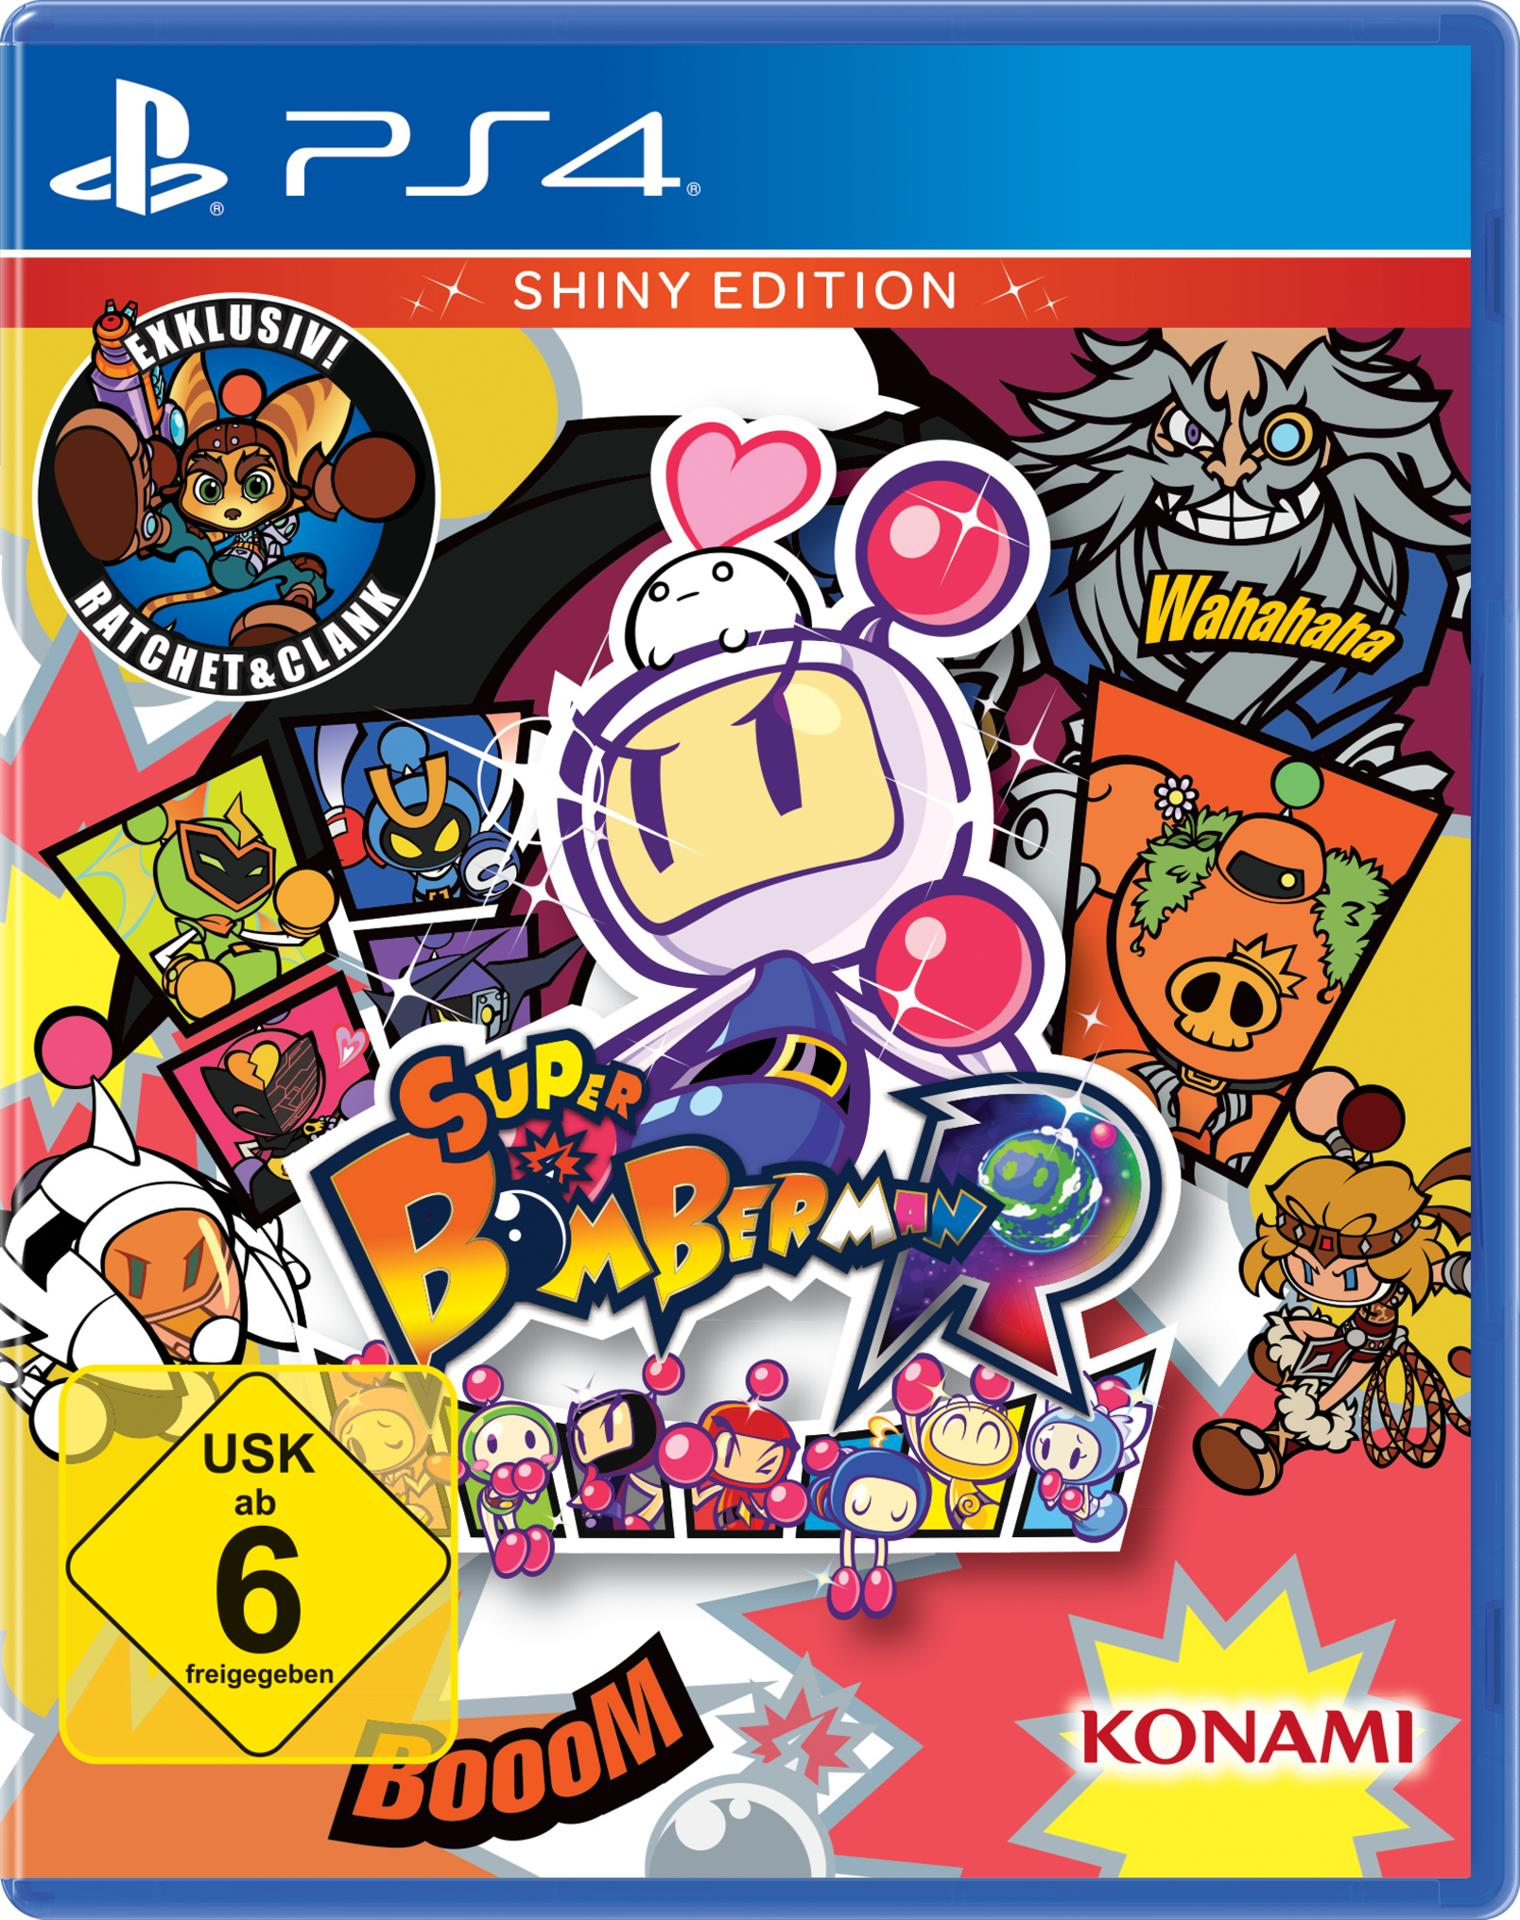 Shiny - - Super Edition R 4] Bomberman [PlayStation